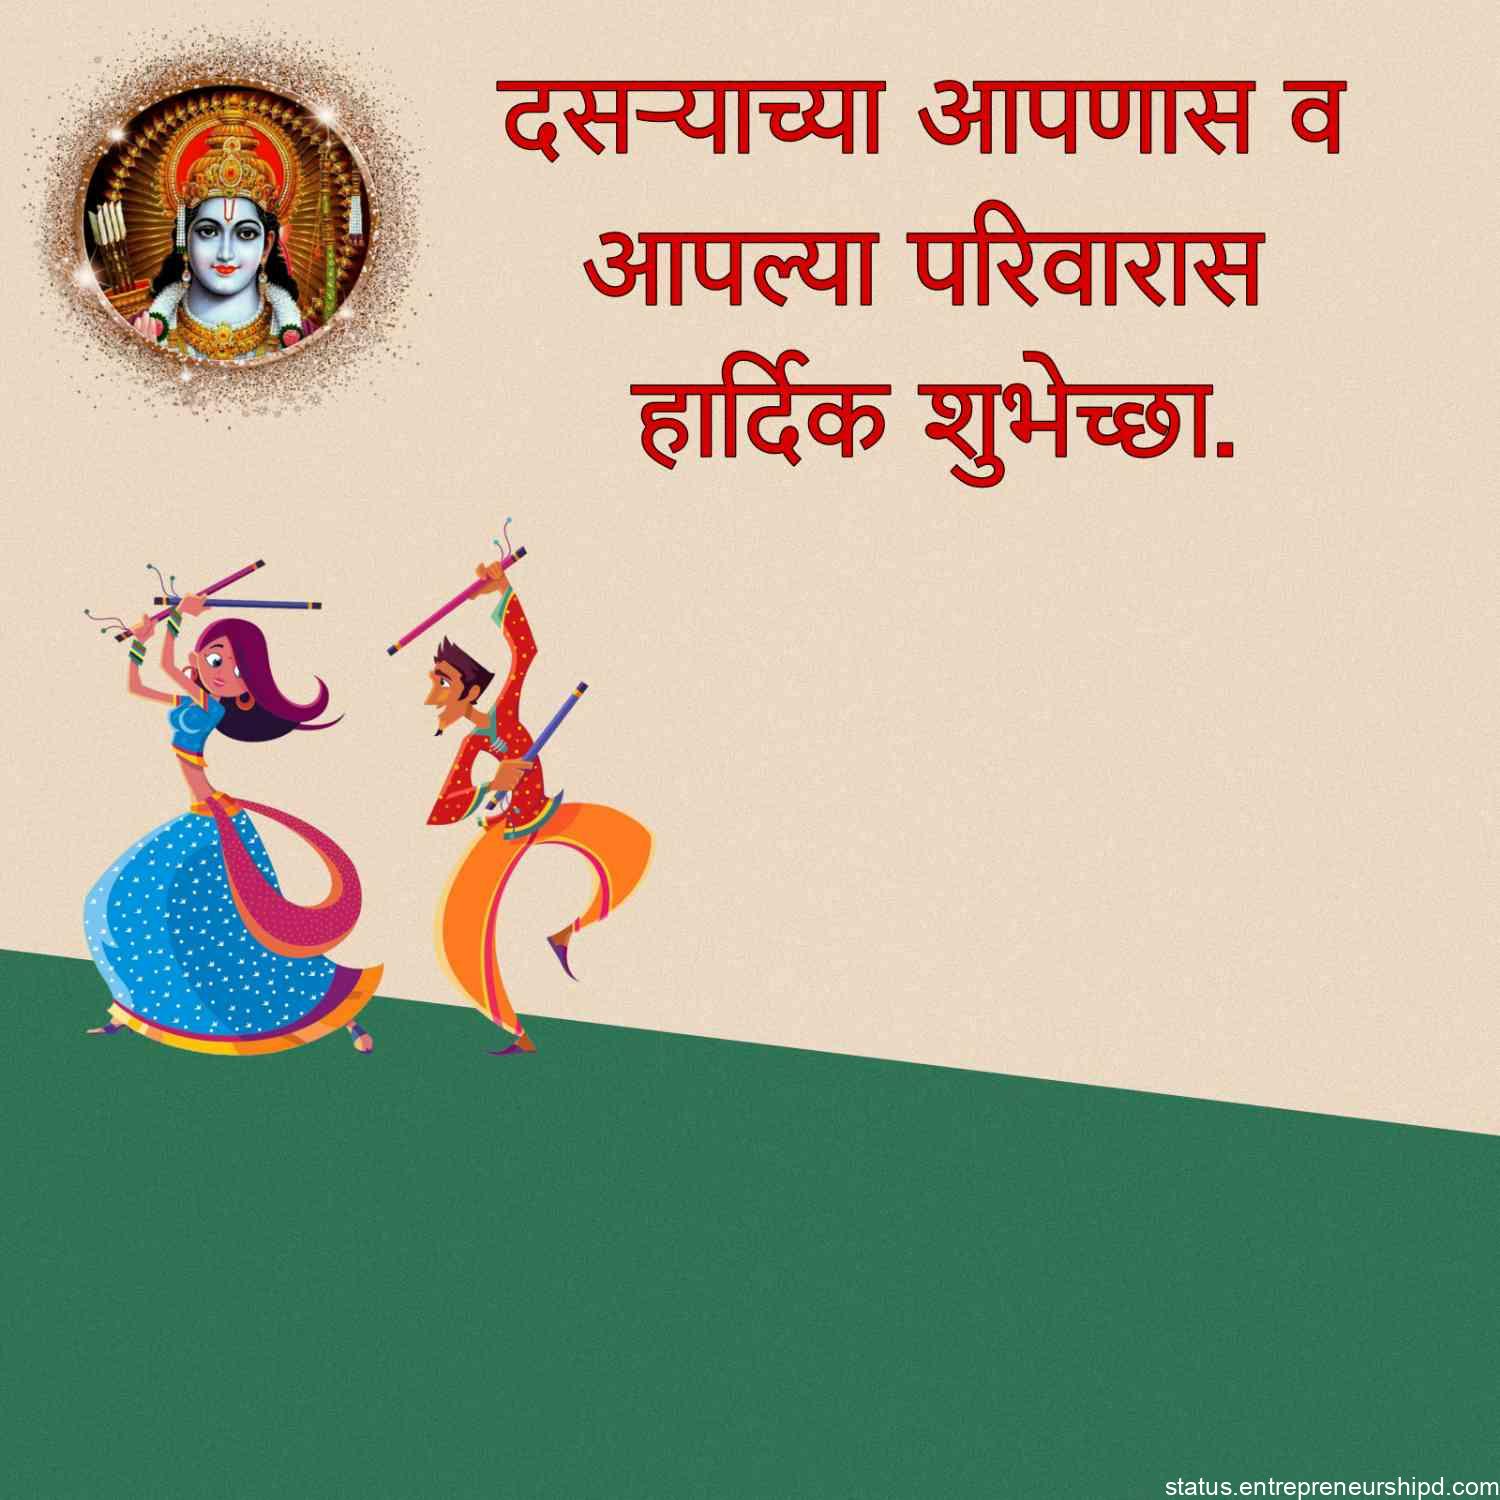 Happy dasara wishes and Message marathi | दसऱ्याच्या हार्दिक शुभेच्छा. -  Marathi Status MHH